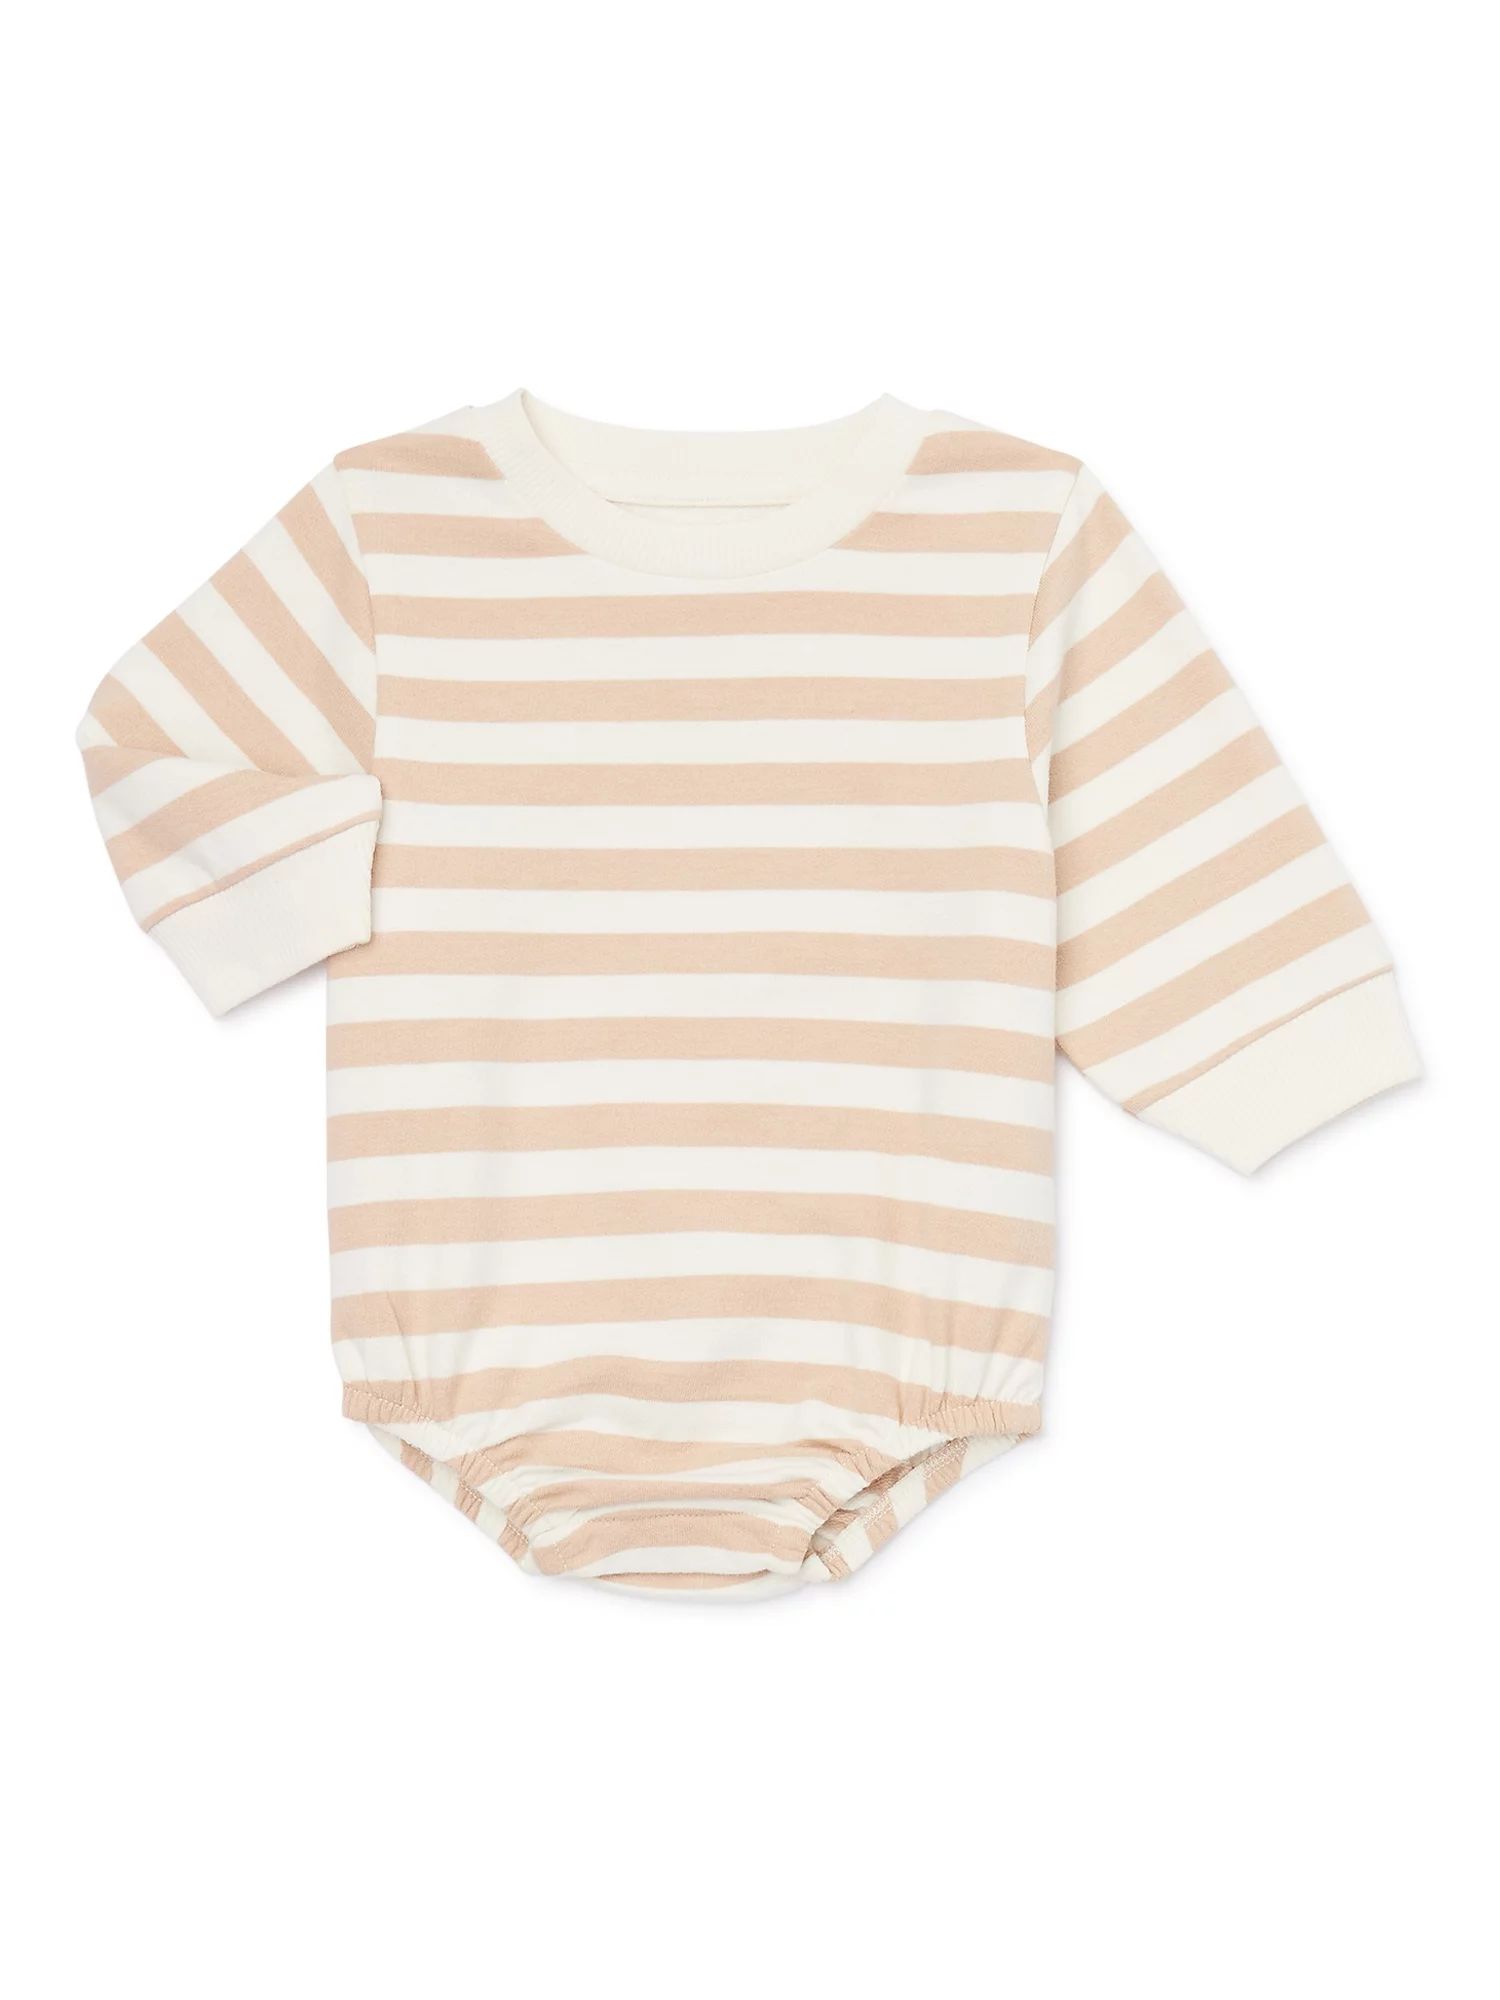 easy-peasy Baby Long Sleeve Sweatshirt Bodysuit, Sizes 0-24 Months | Walmart (US)